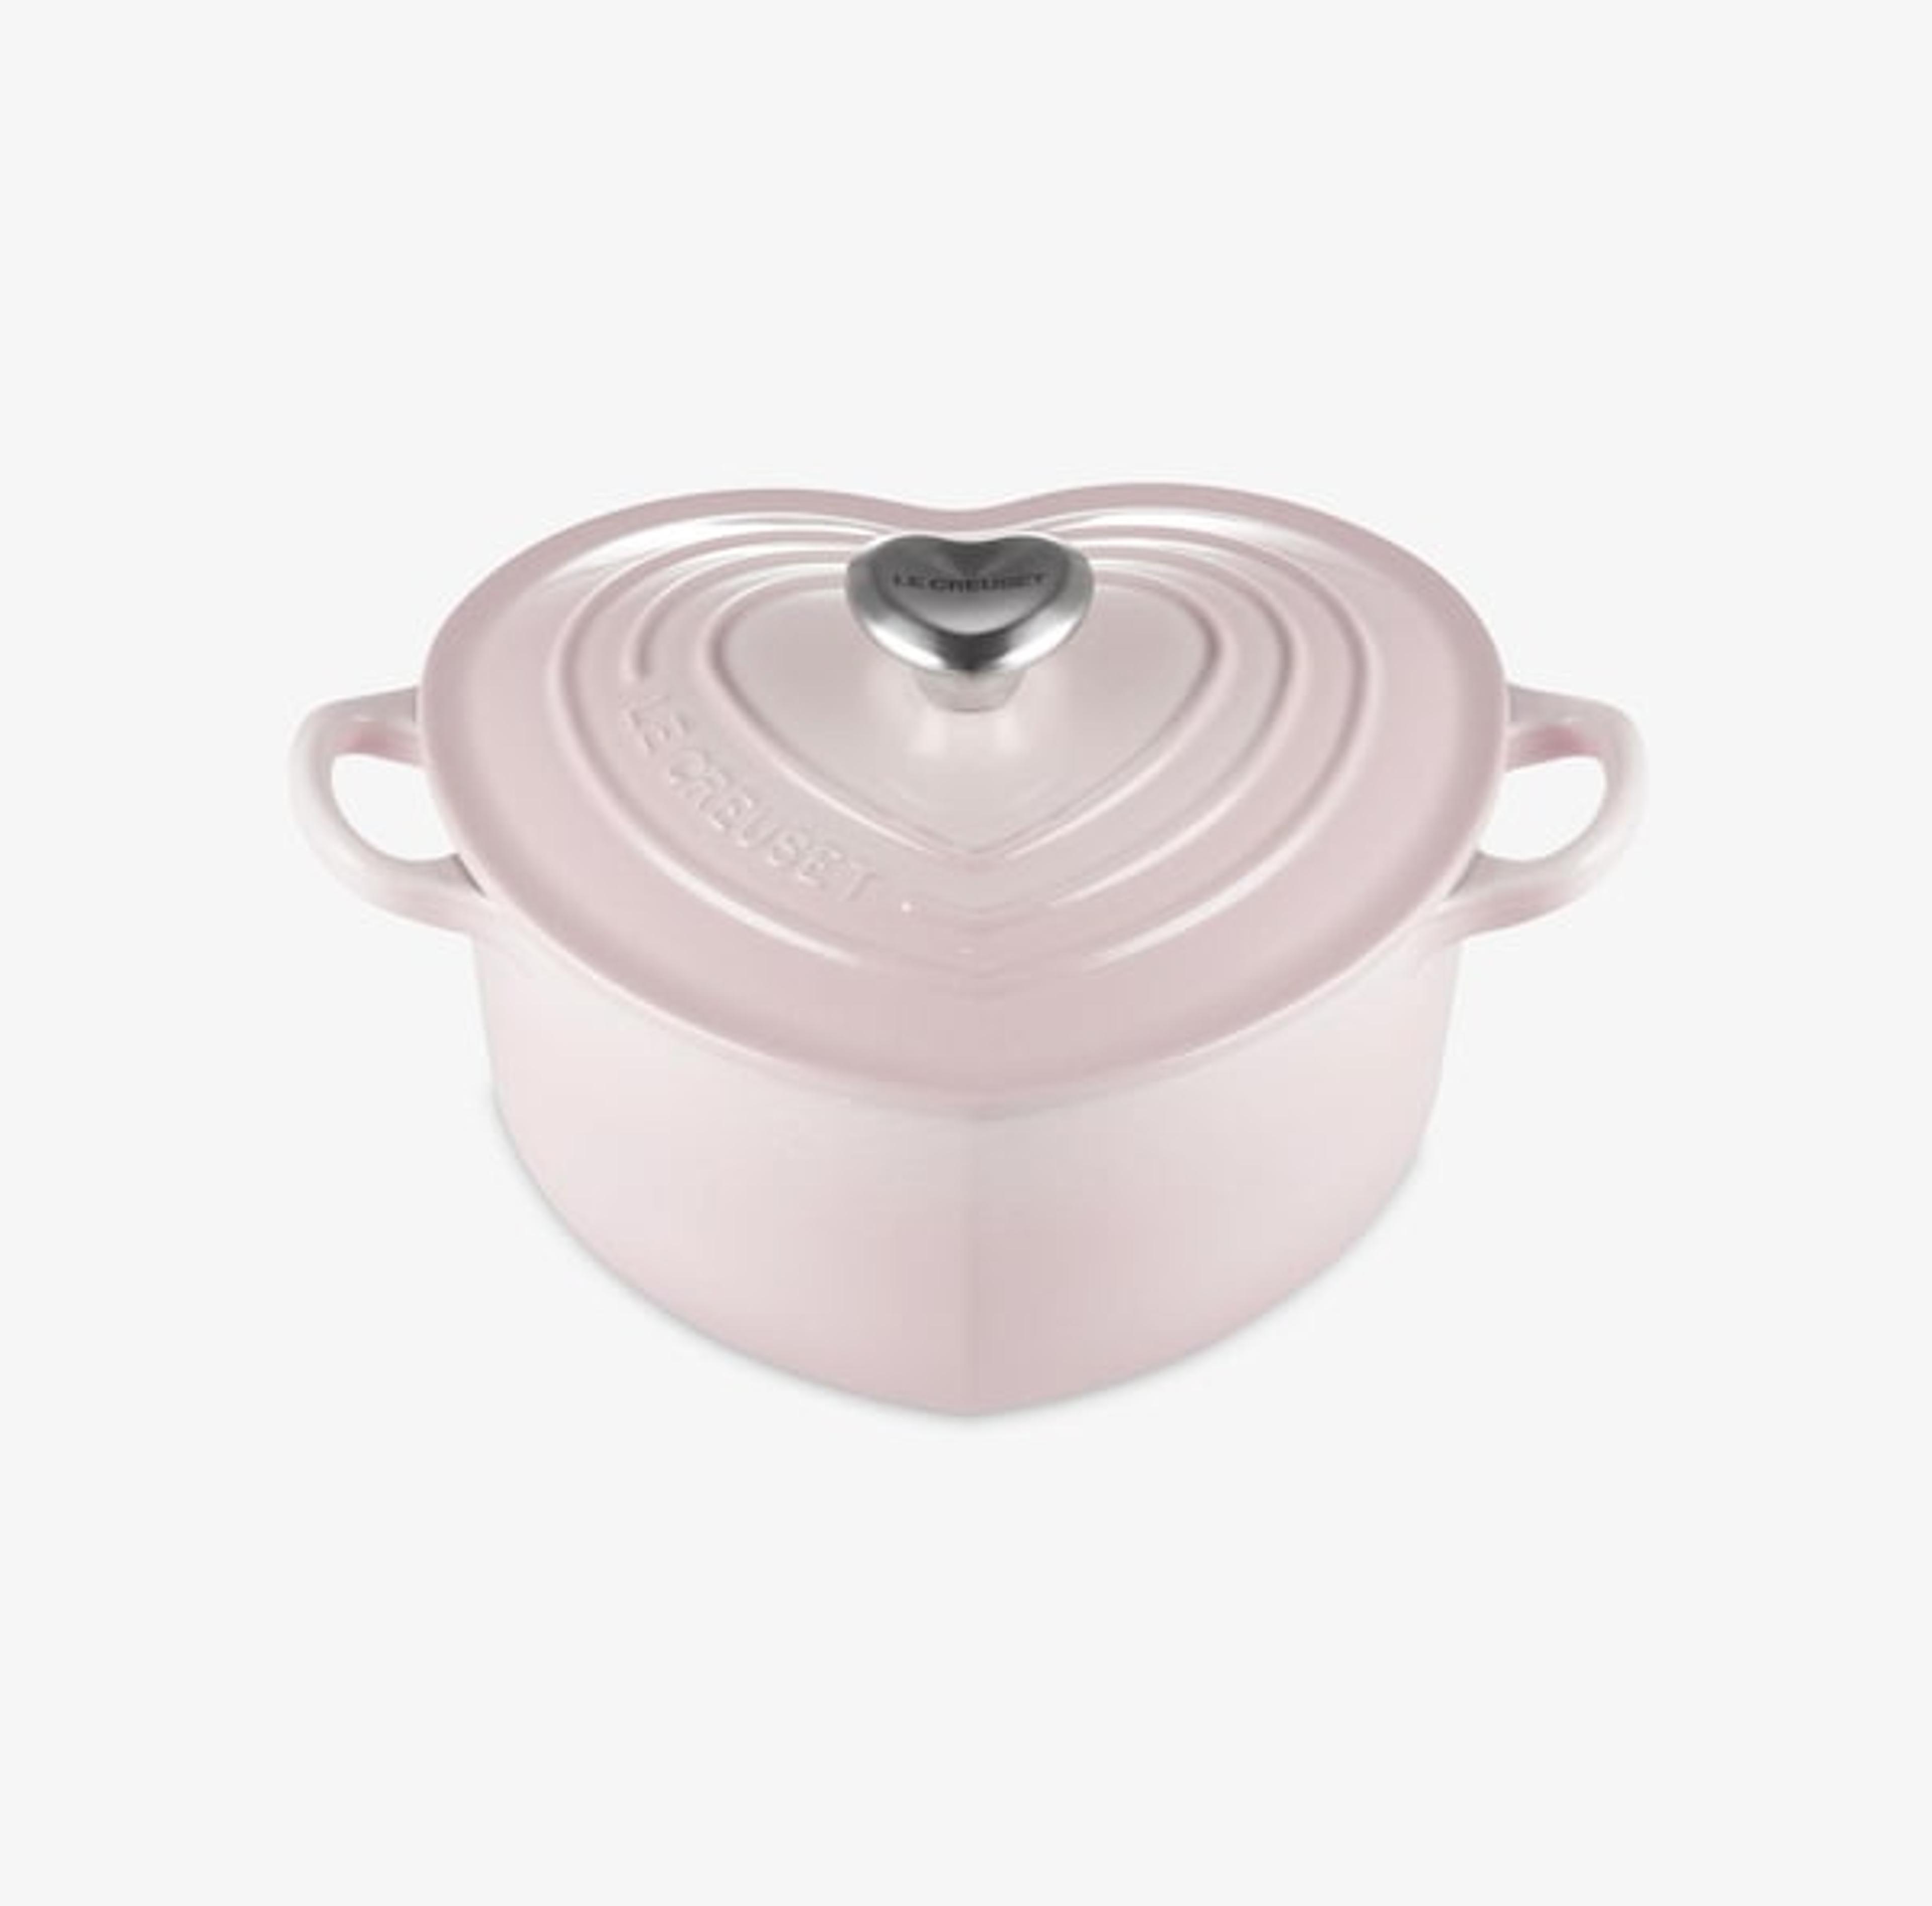 Le Creuset Herzbräter mit Herzknopf Shell Pink (Emailliert, Gusseisen emailliert, Kochtopf, Bräter/Schmortopf)